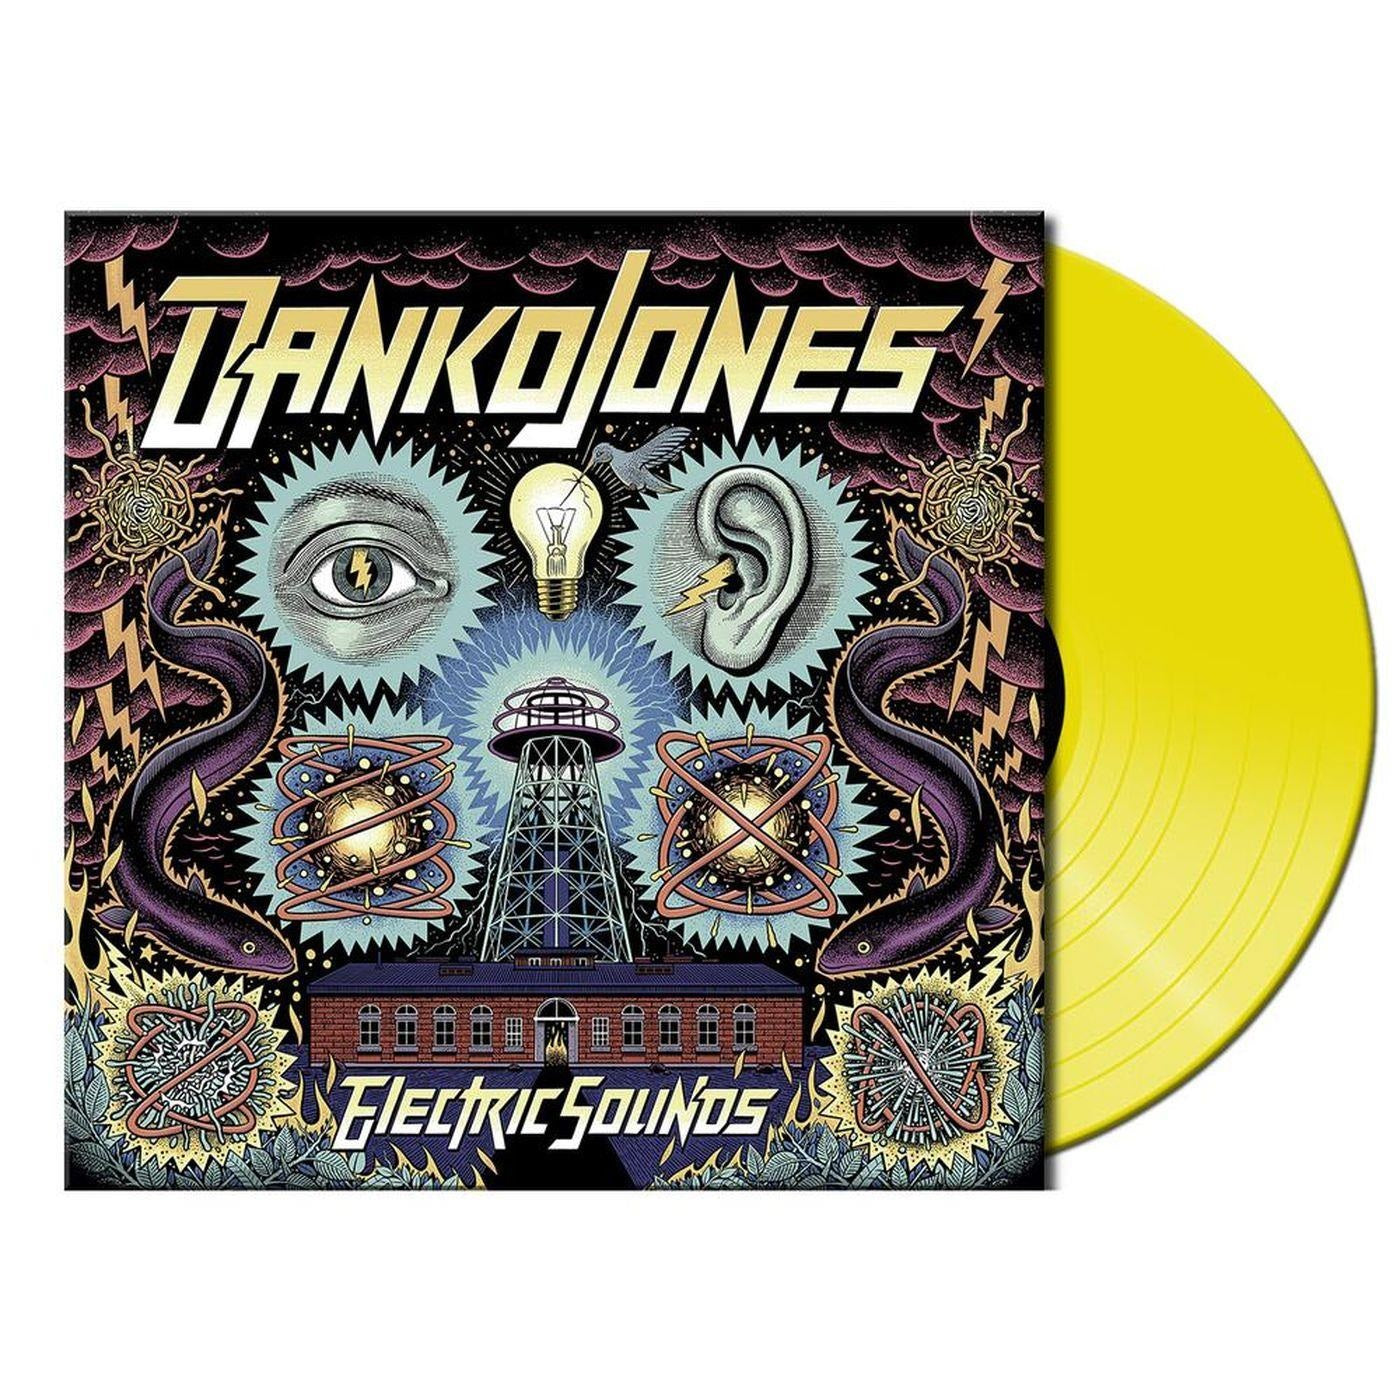 Jones, Danko - Electric Sounds (Ltd. Ed. Yellow vinyl) - Vinyl - New - PRE-ORDER